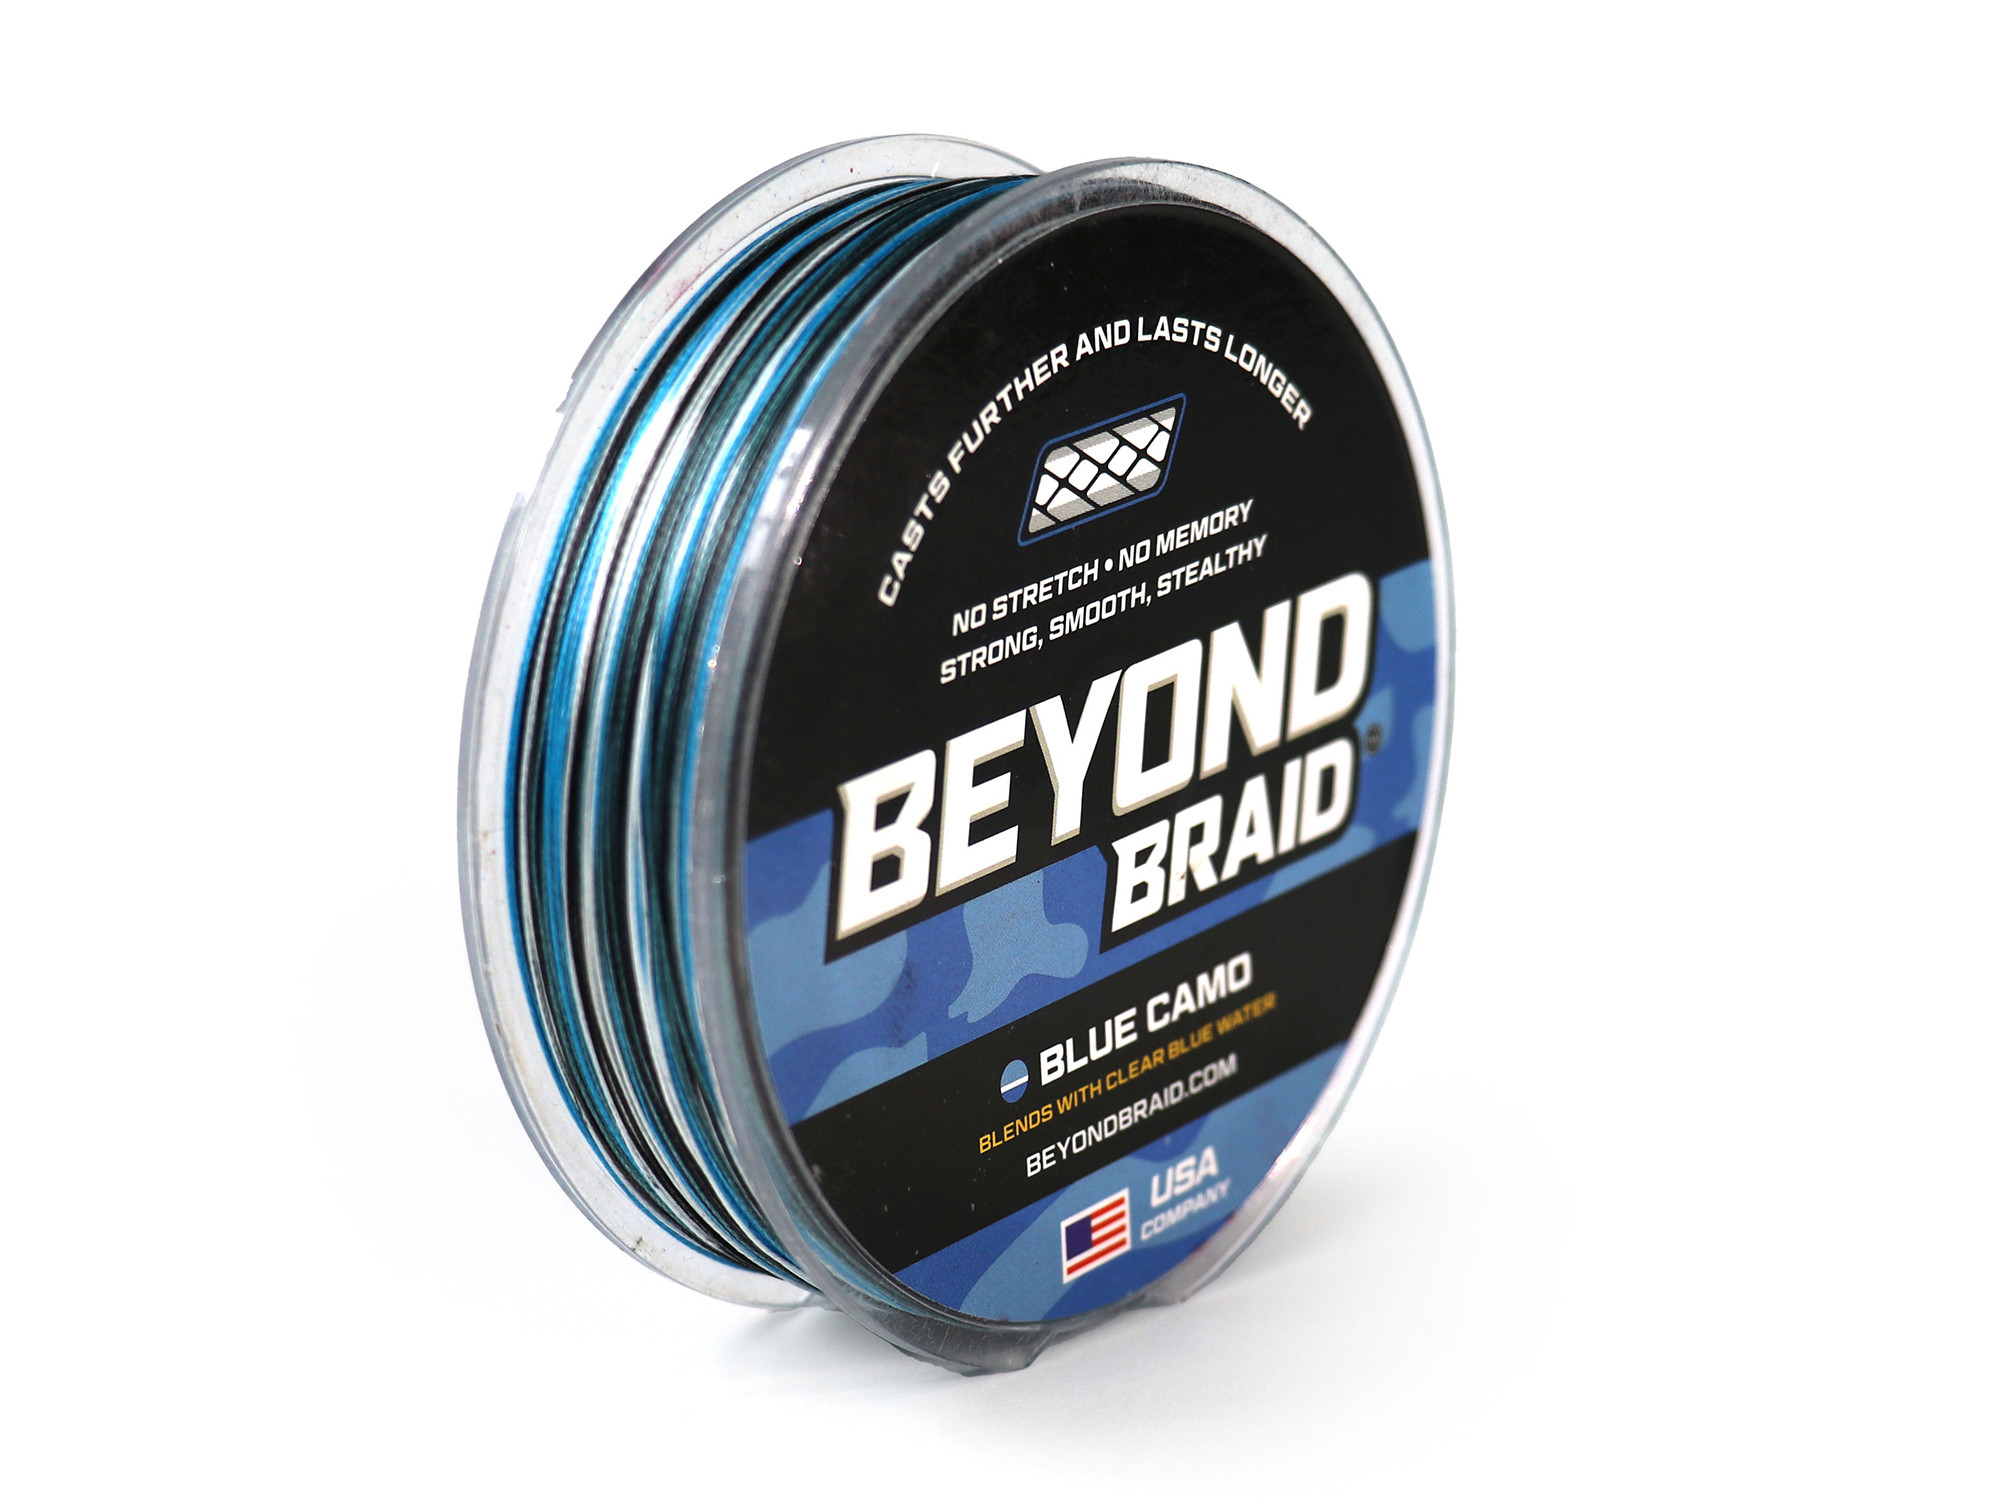 The Ultimate Package for Beyond Braid - Beyond Braid